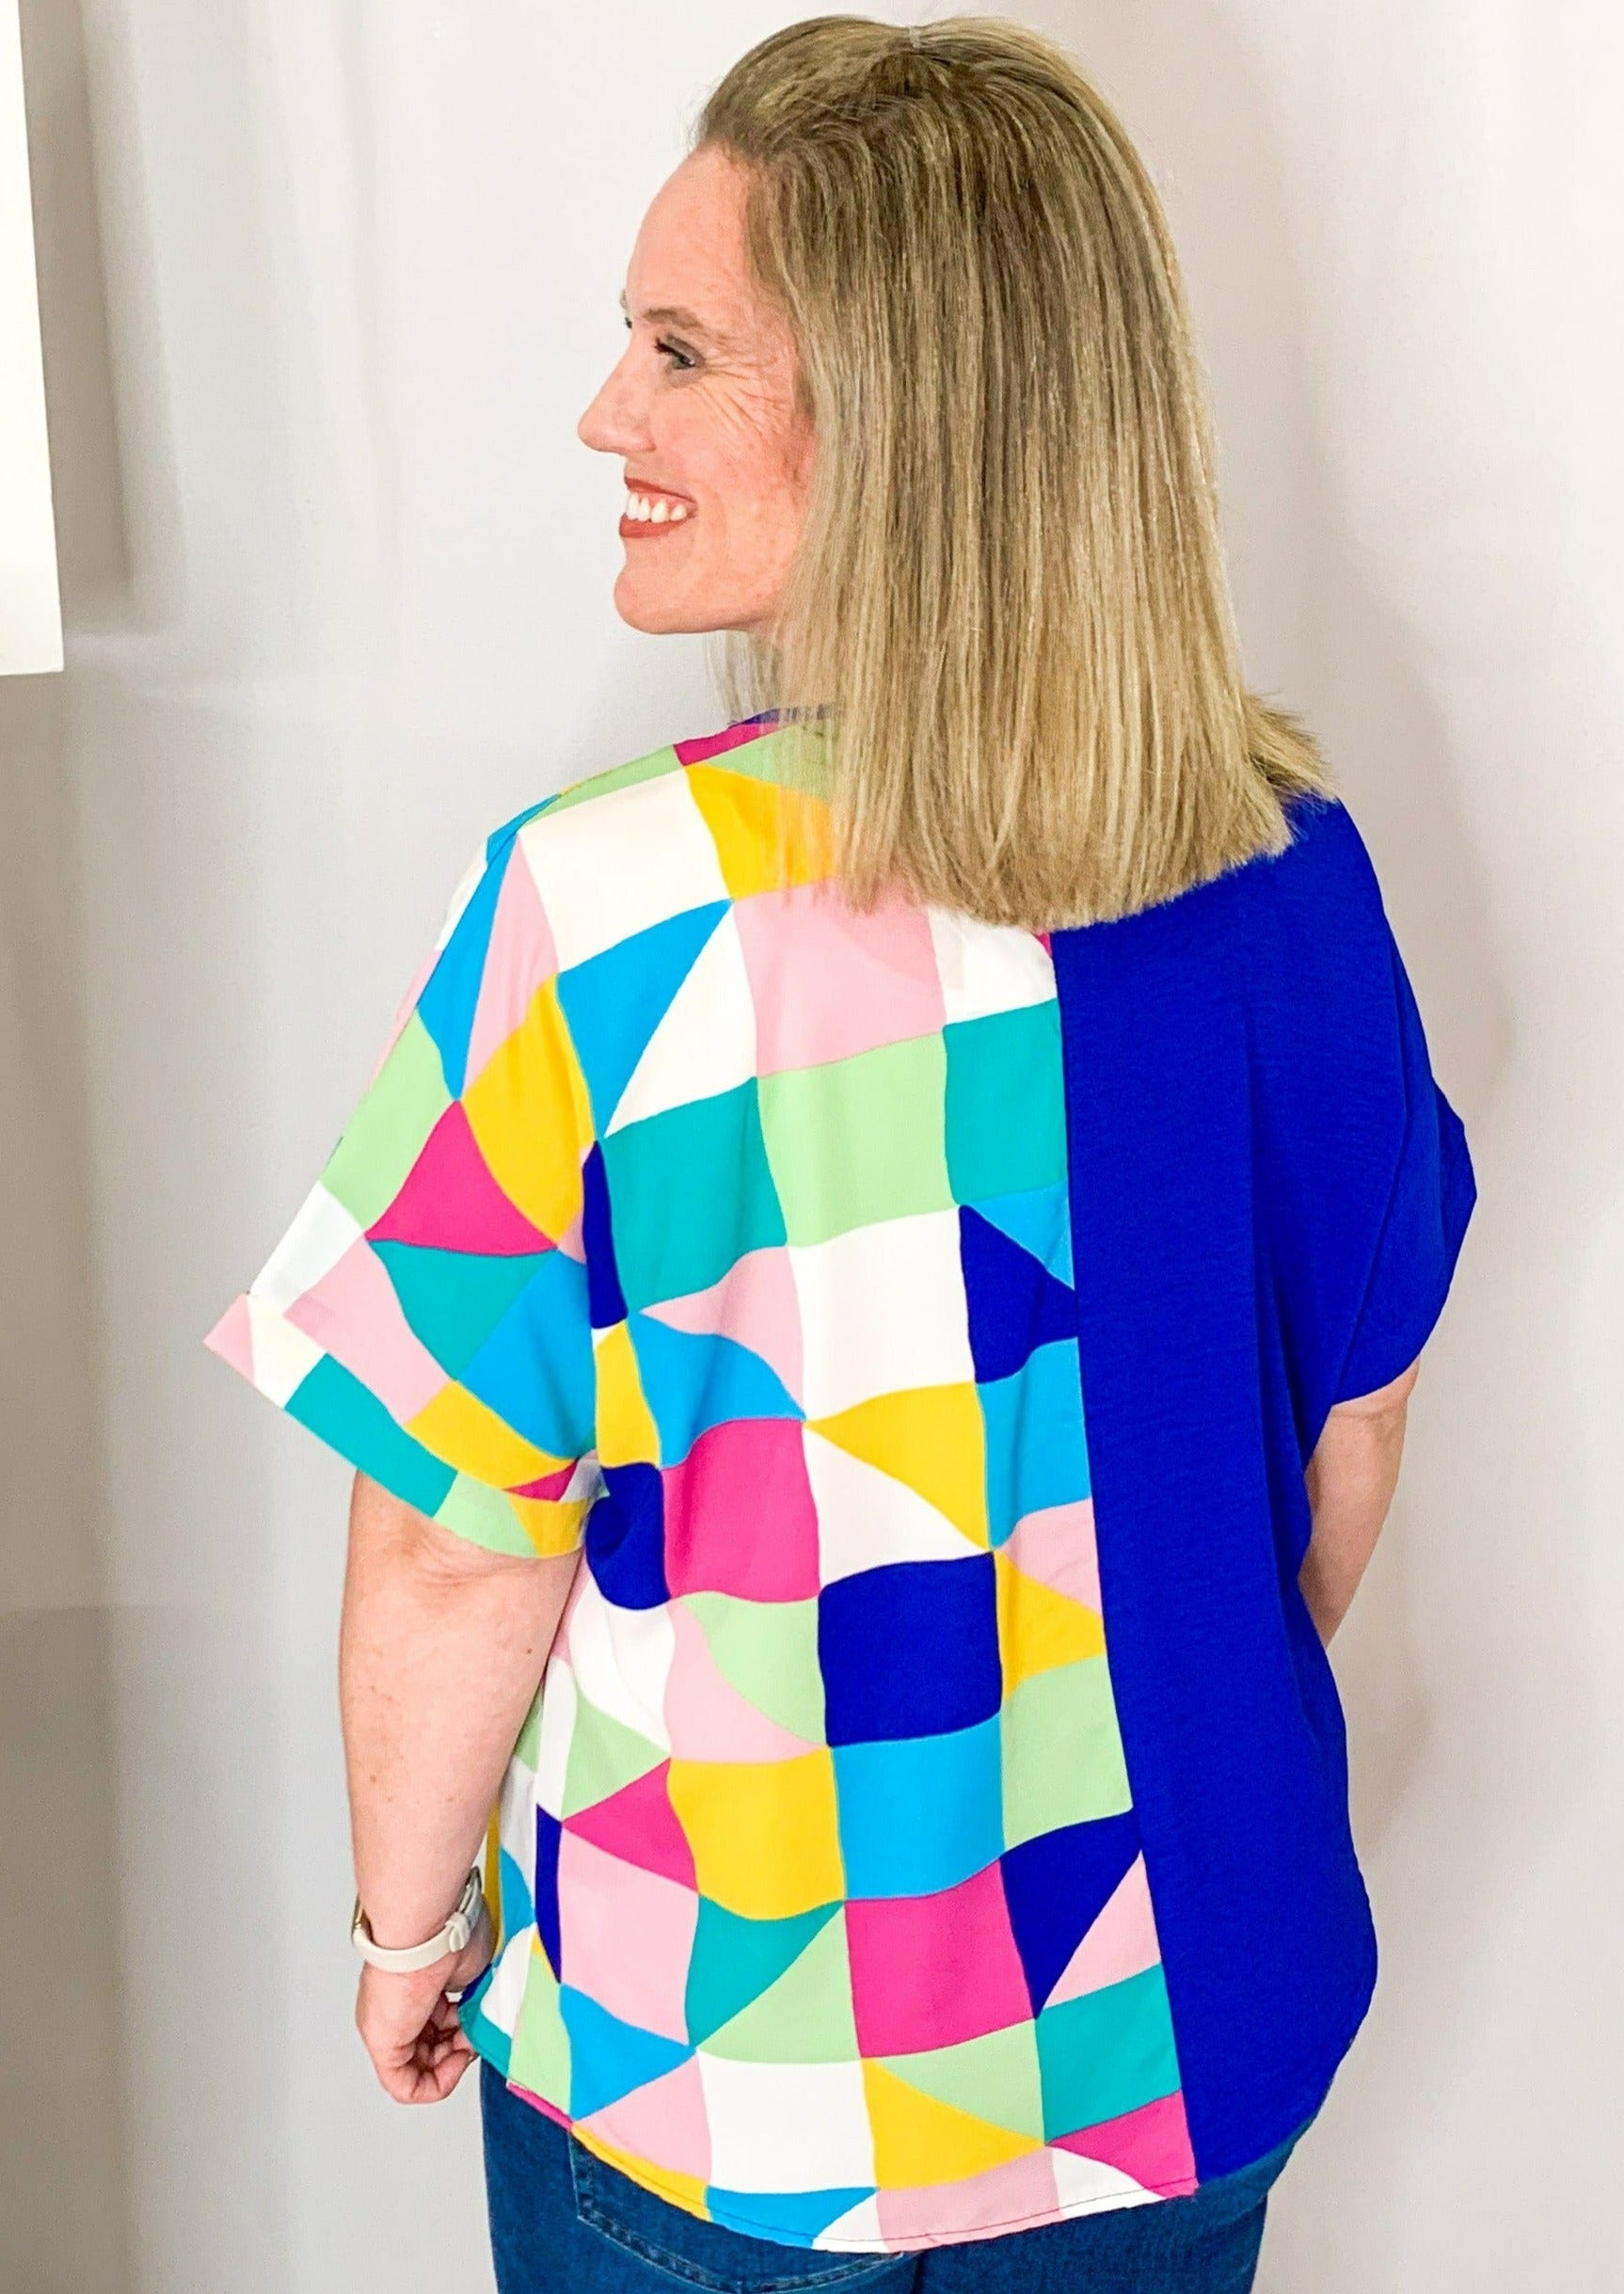 Half multicolored geometric pattern and half blue v neck top